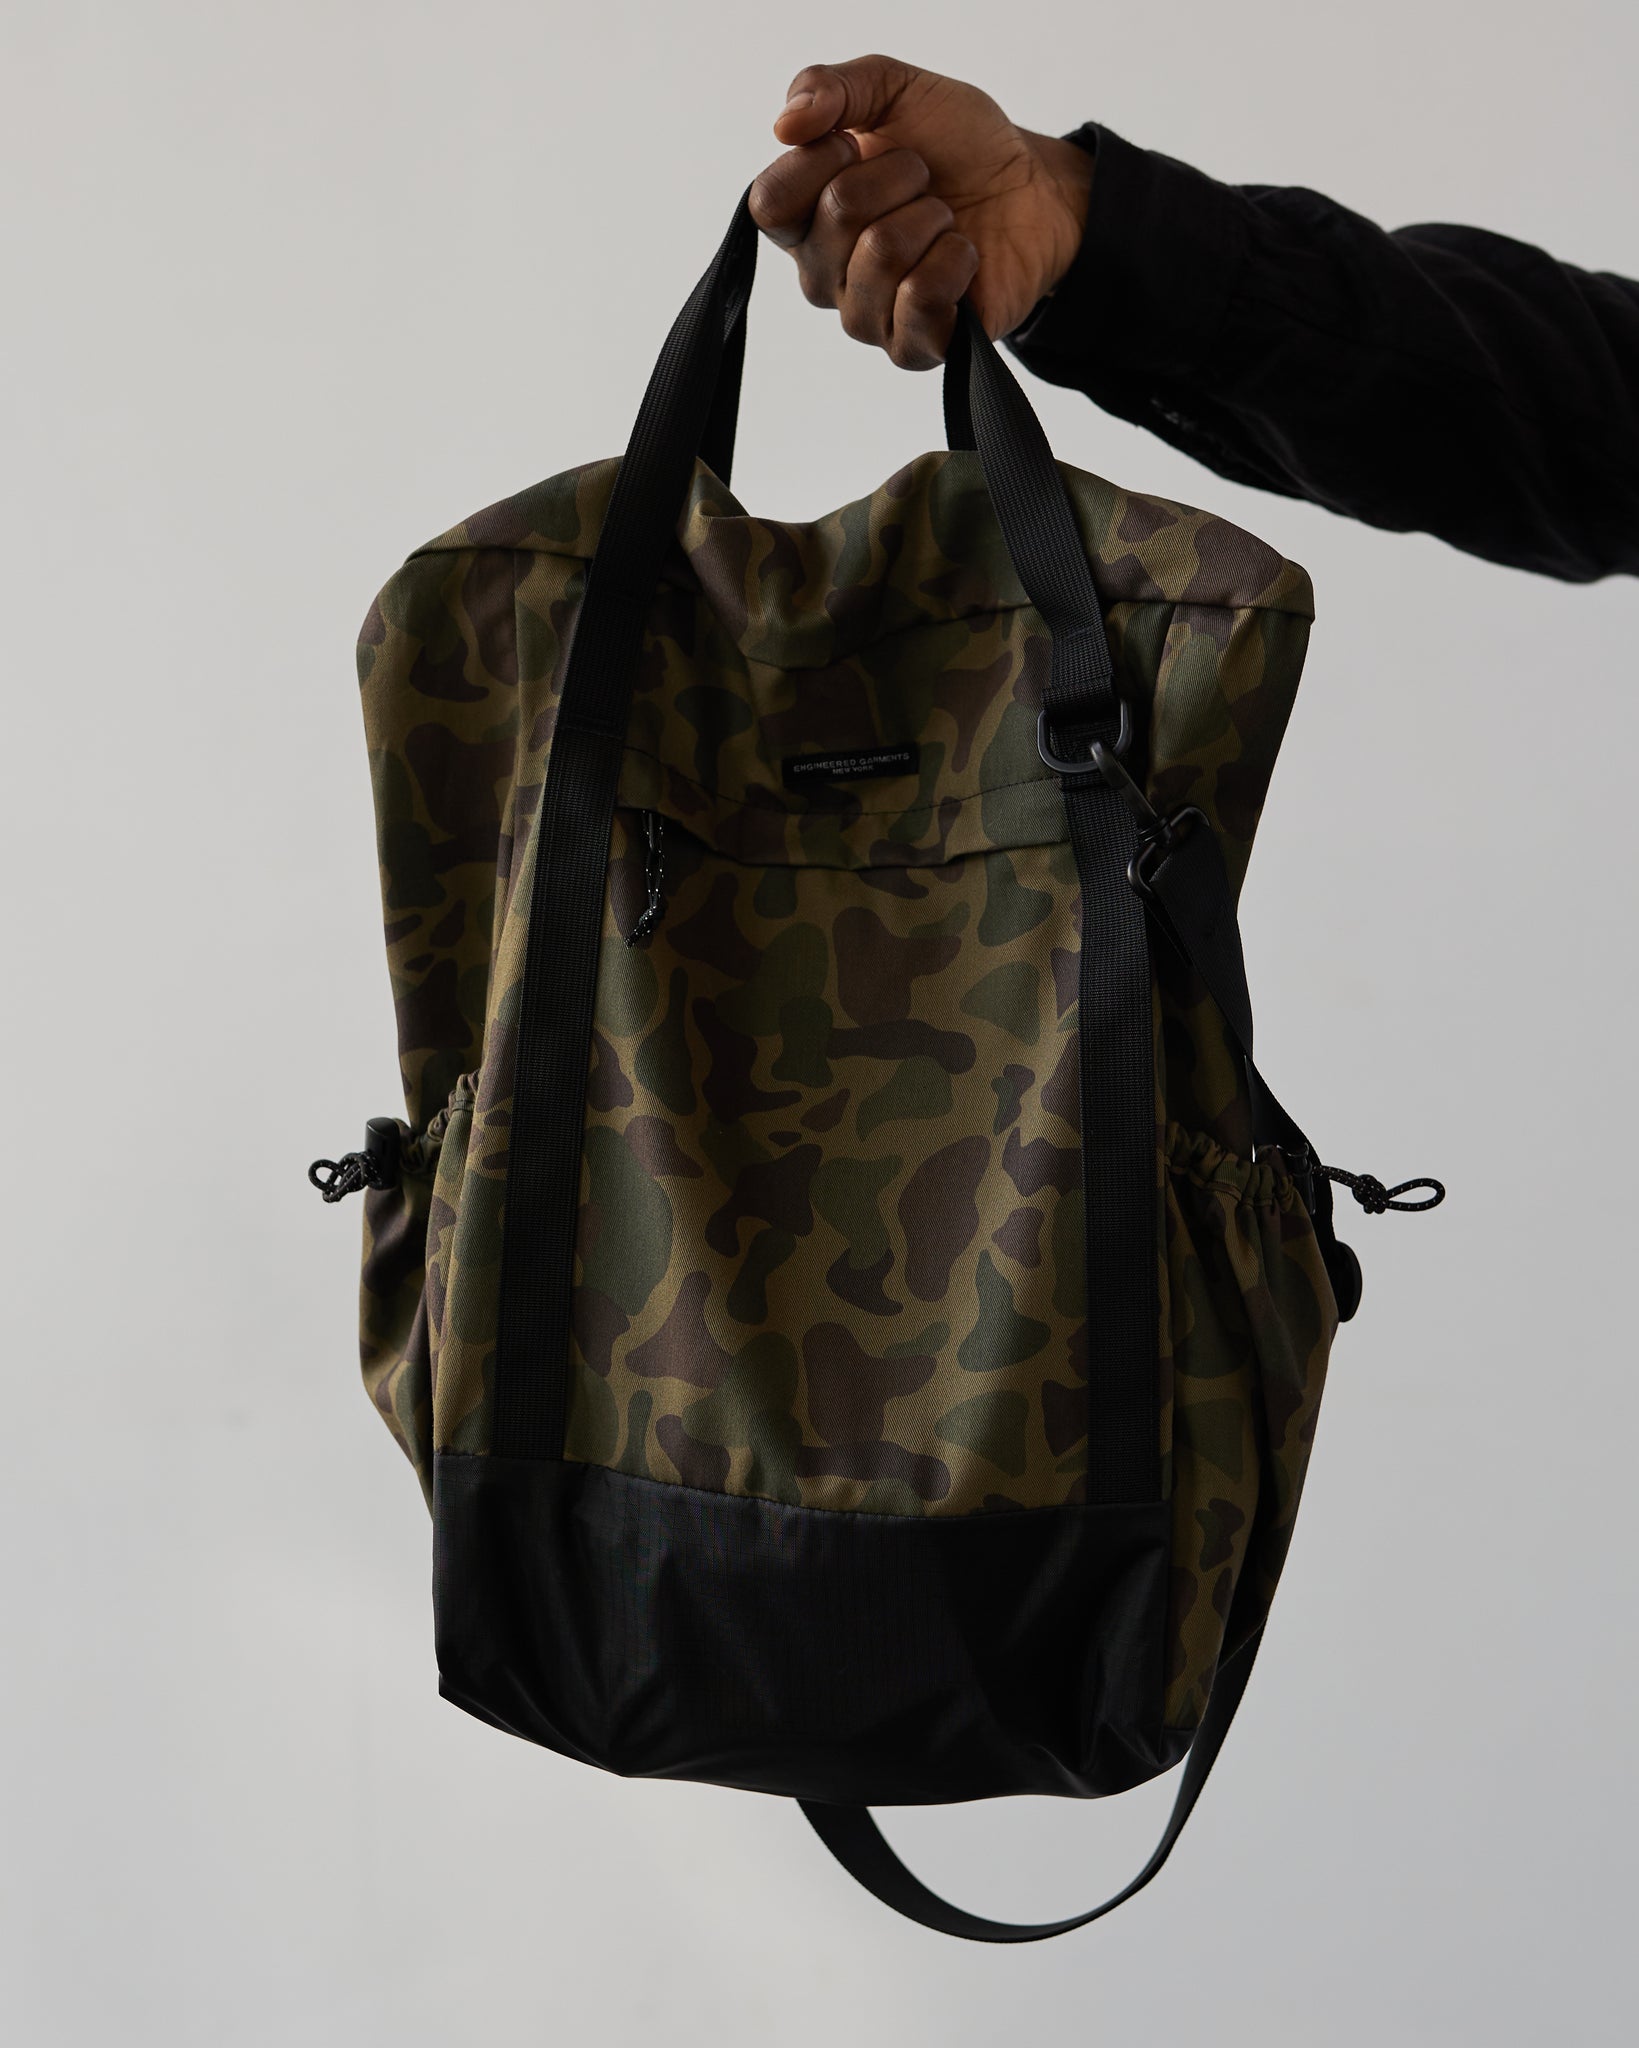 West Forest Rhinestone Cross Messenger Bag Camo Purse (GREEN): Handbags:  Amazon.com